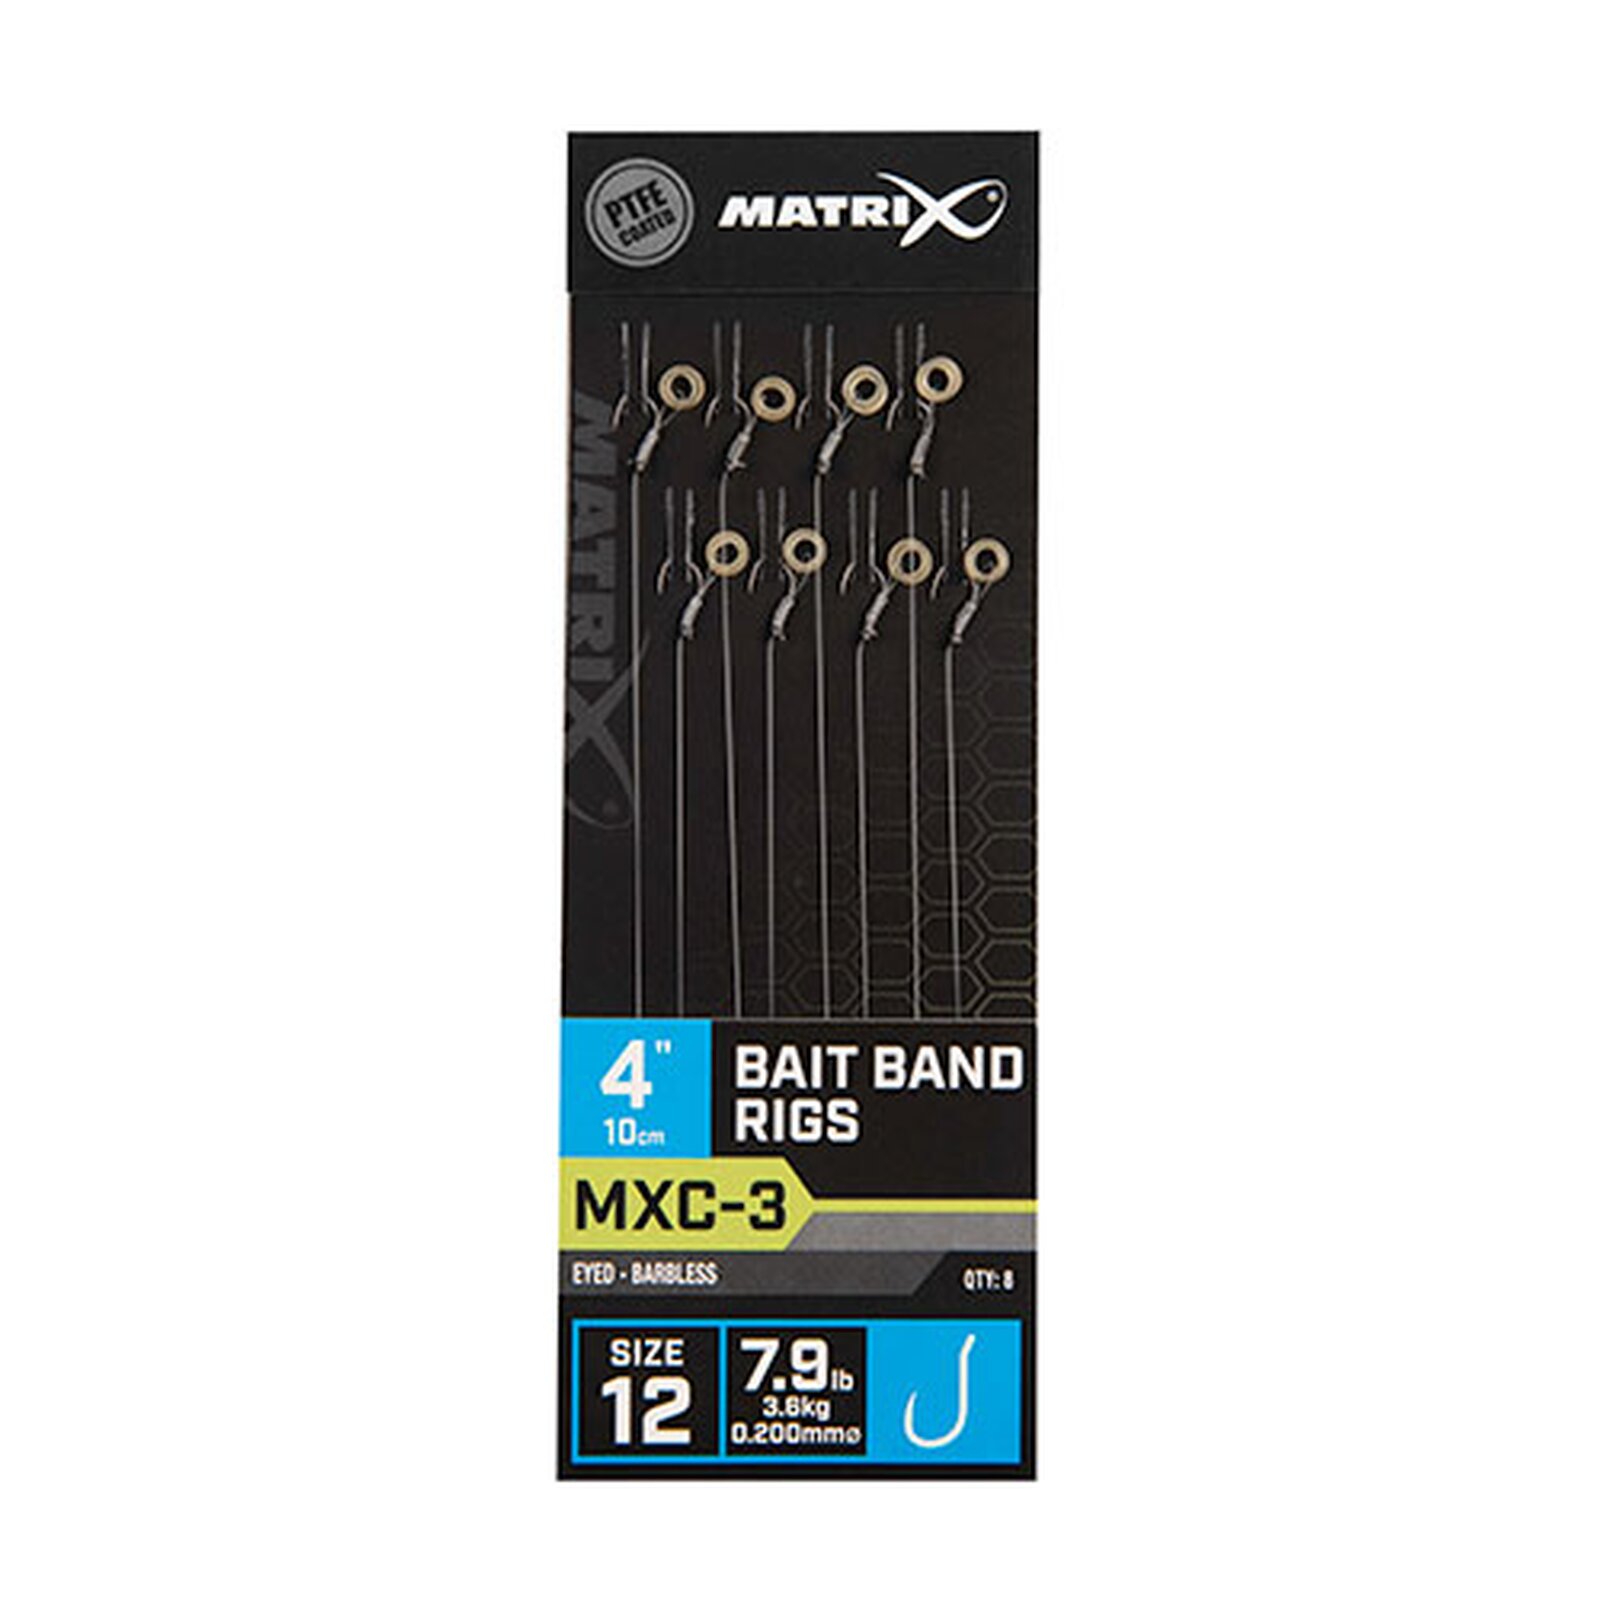 Matrix MXC-3 Bait Band Rigs Barbless #16 10cm/4 8Stk.